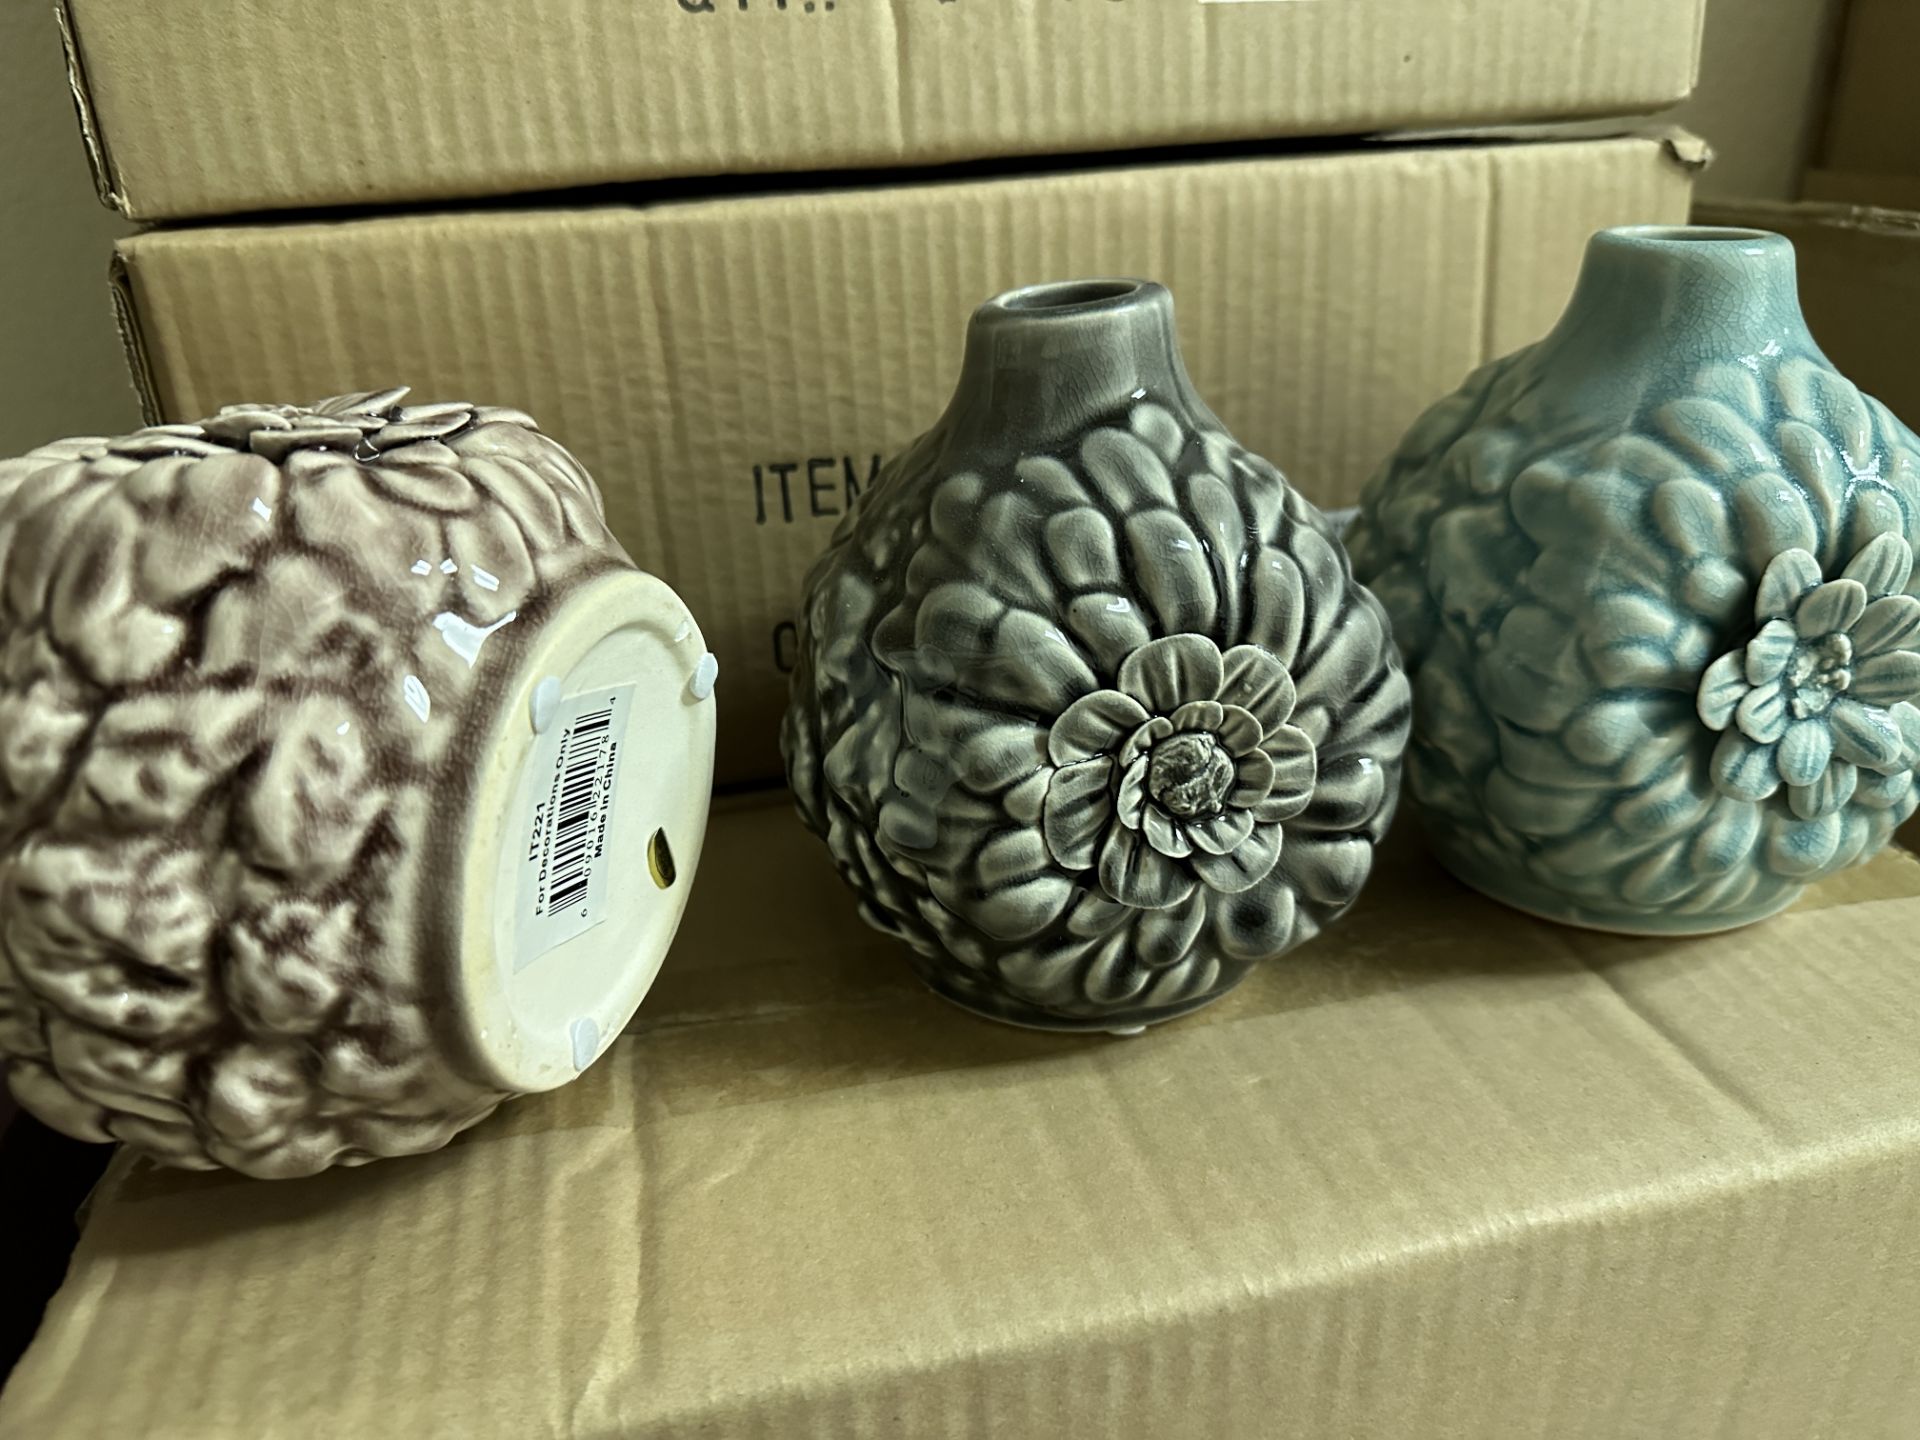 12x Decorative Ceramic Vases with Floral design, 3 different colors, IT221x4 - Image 5 of 5